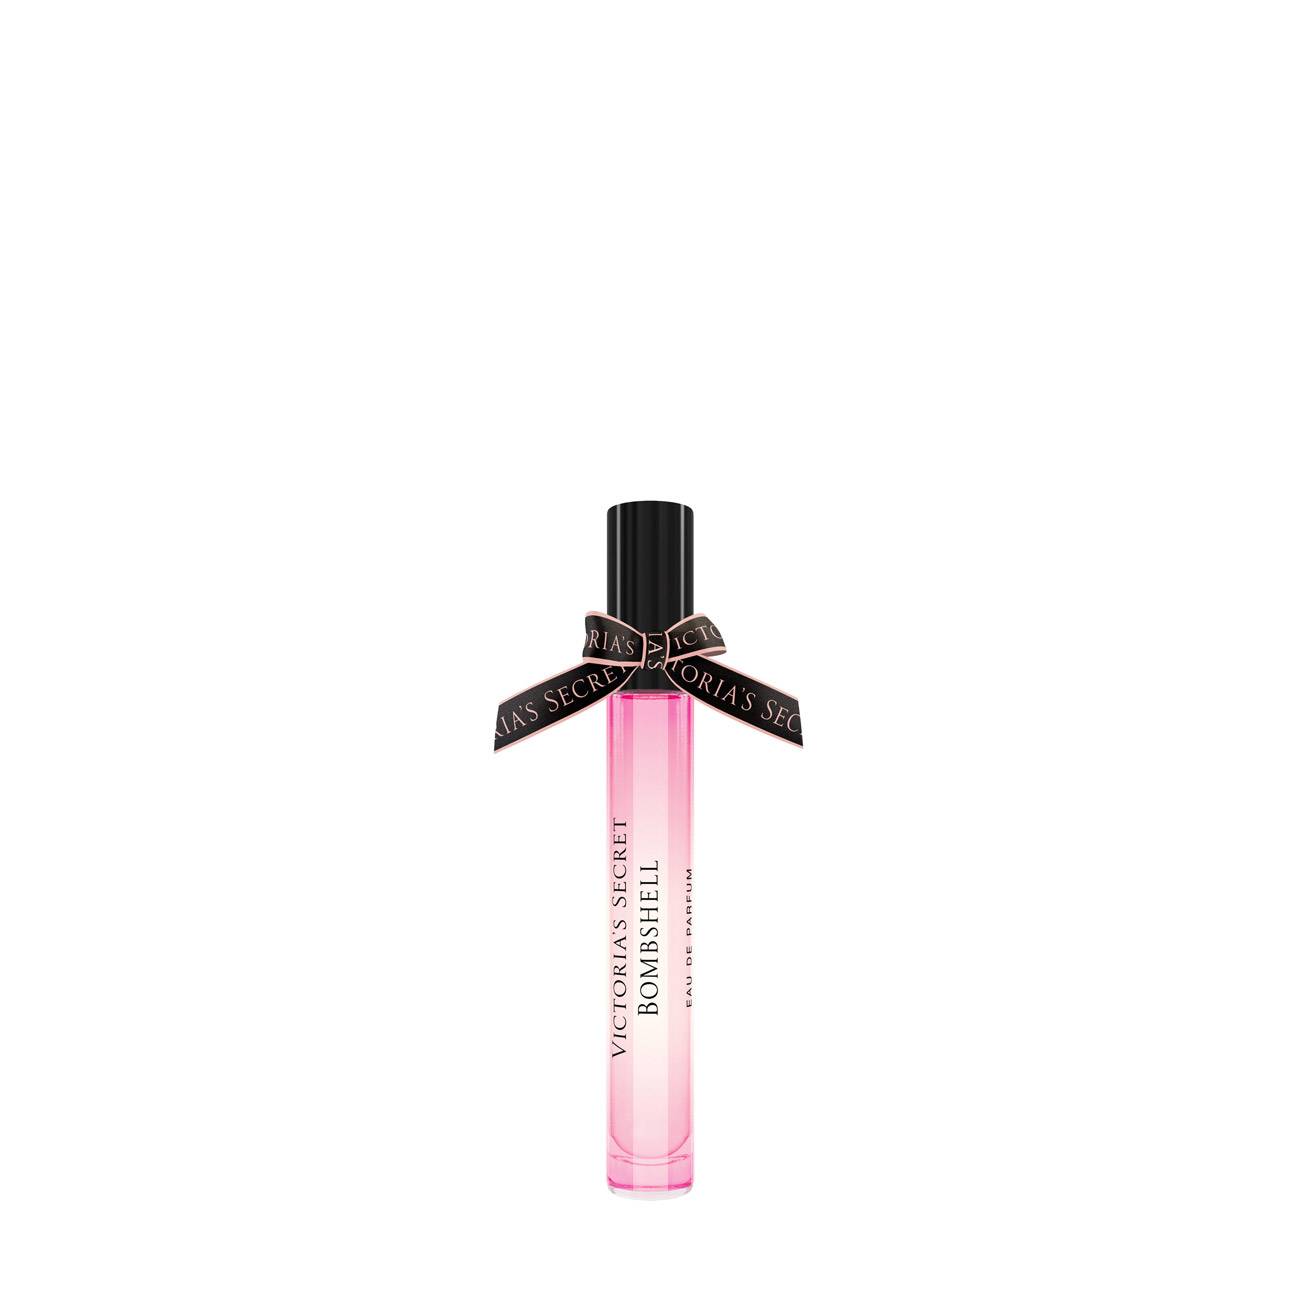 Apa de Parfum Victoria's Secret BOMBSHELL ROLLERBALL 7ml cu comanda online